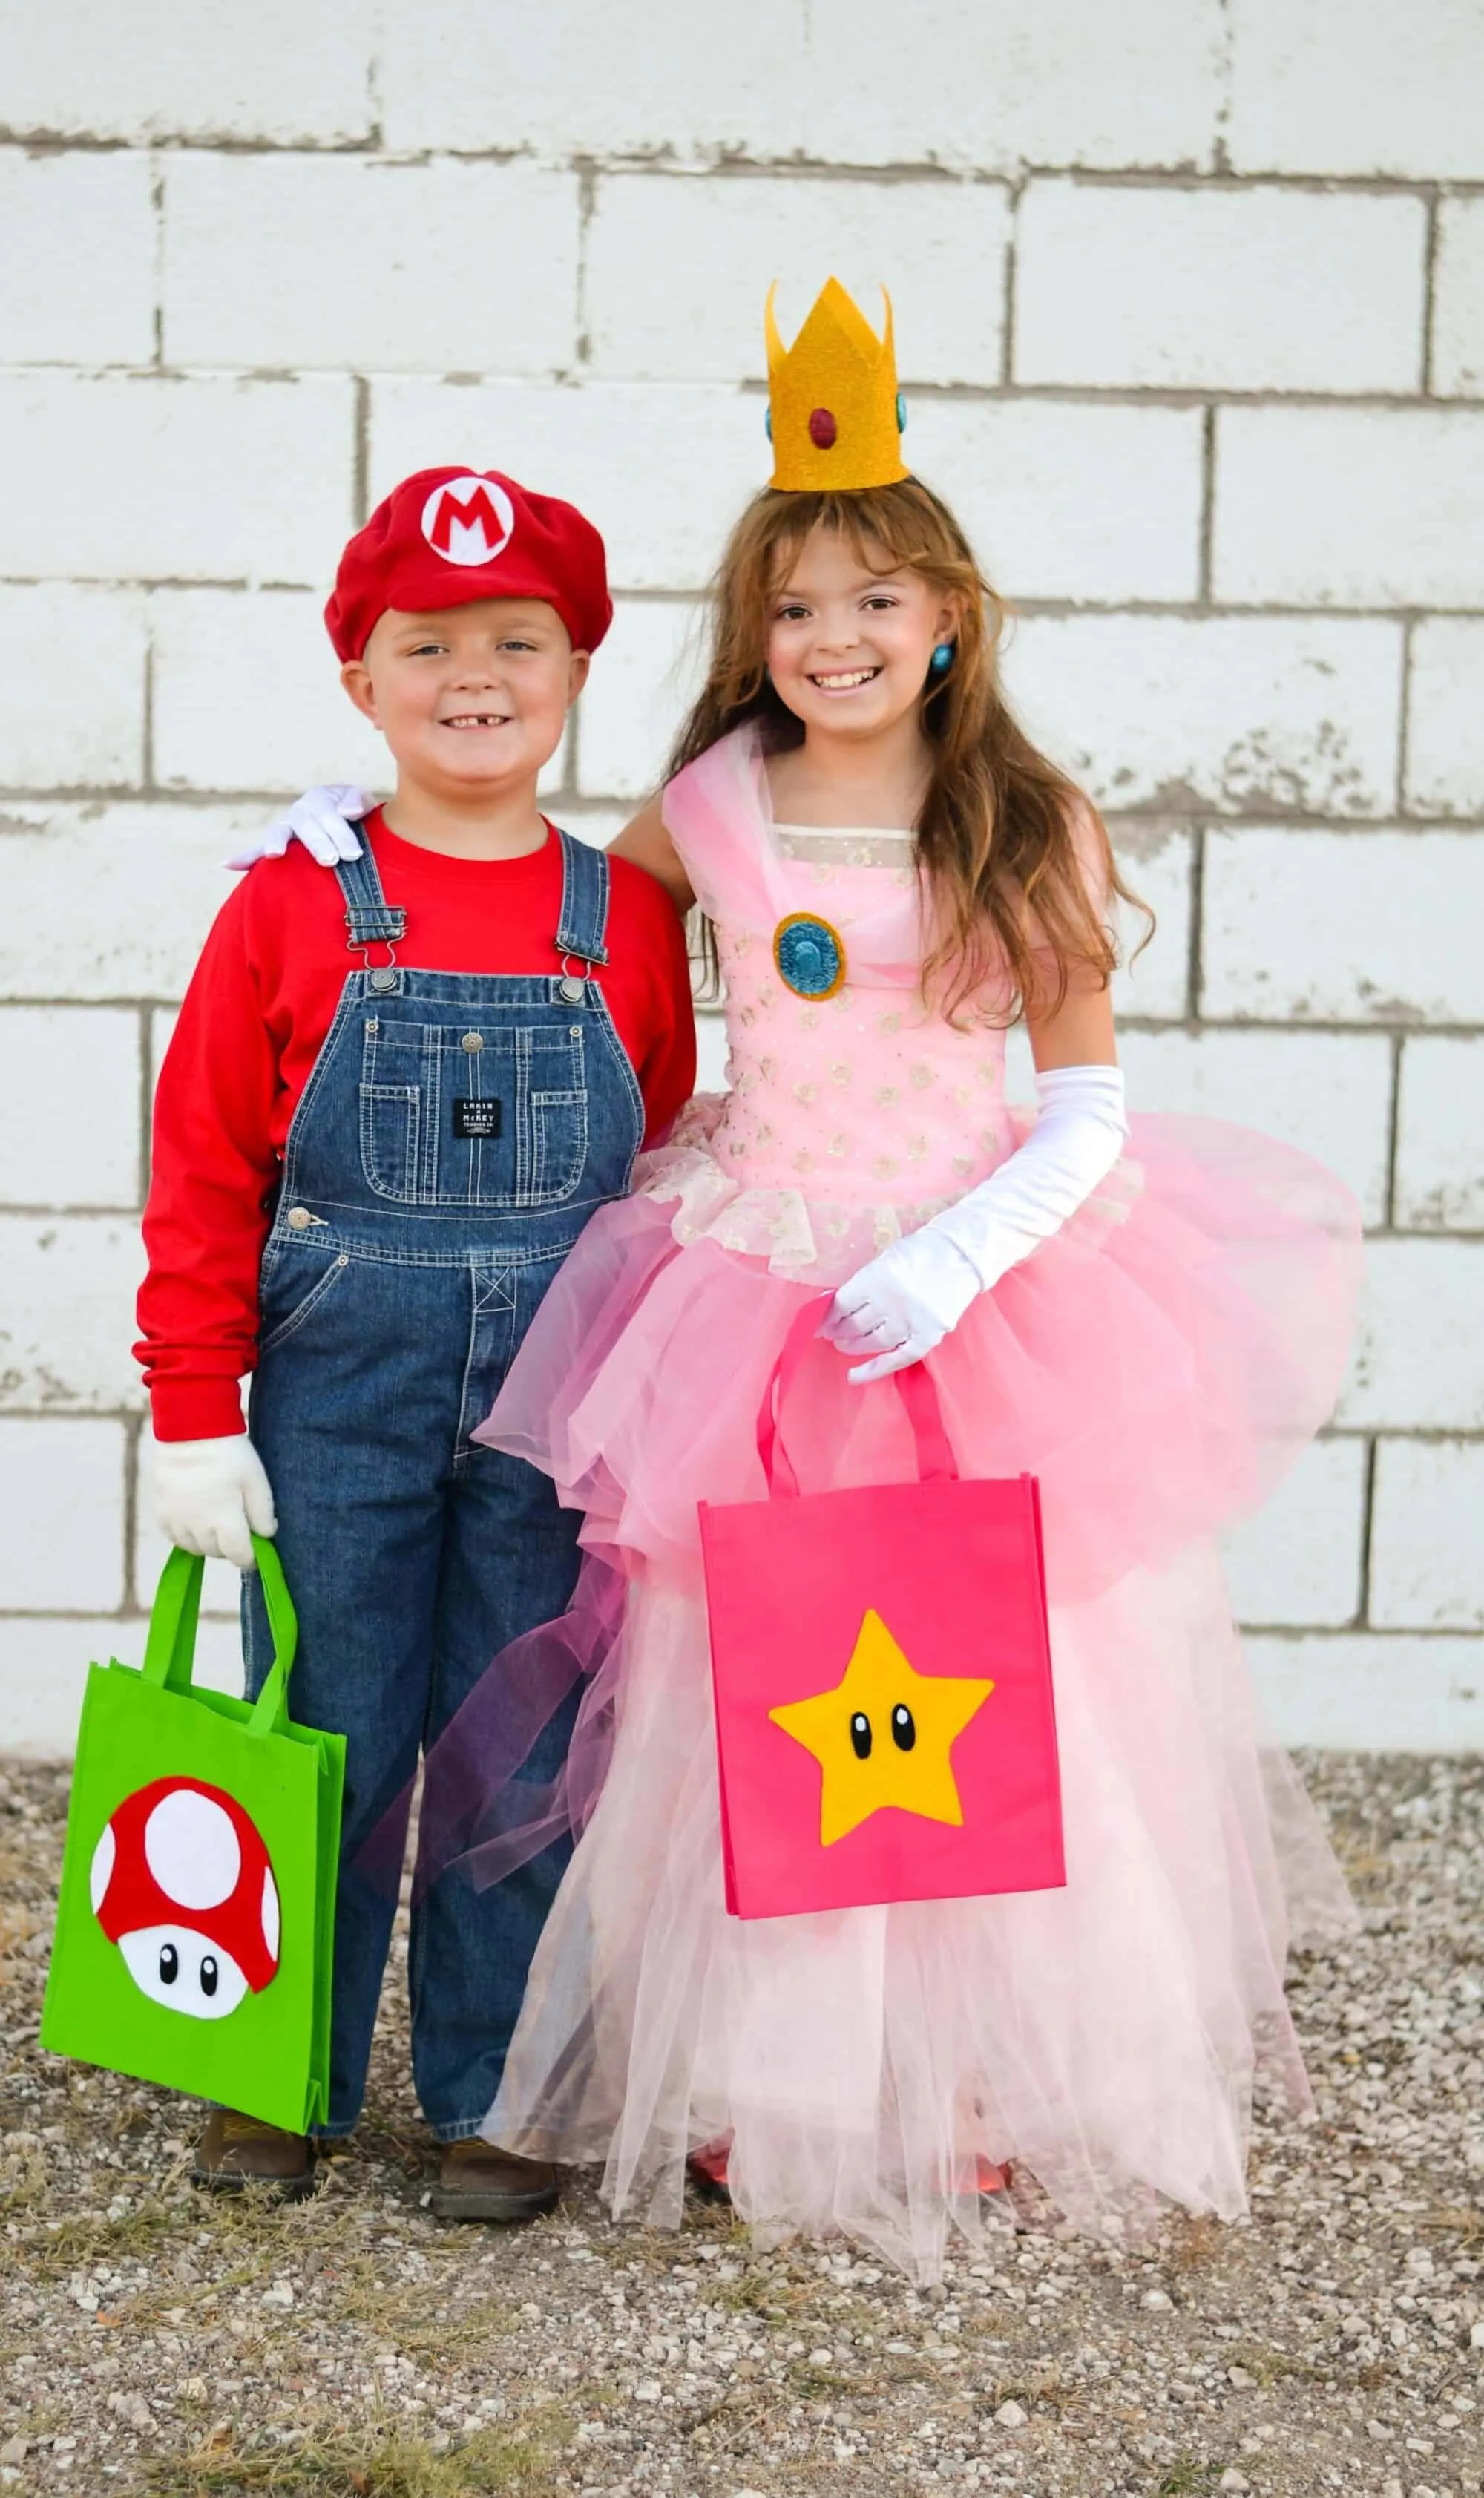 Mario and princess peach costumes